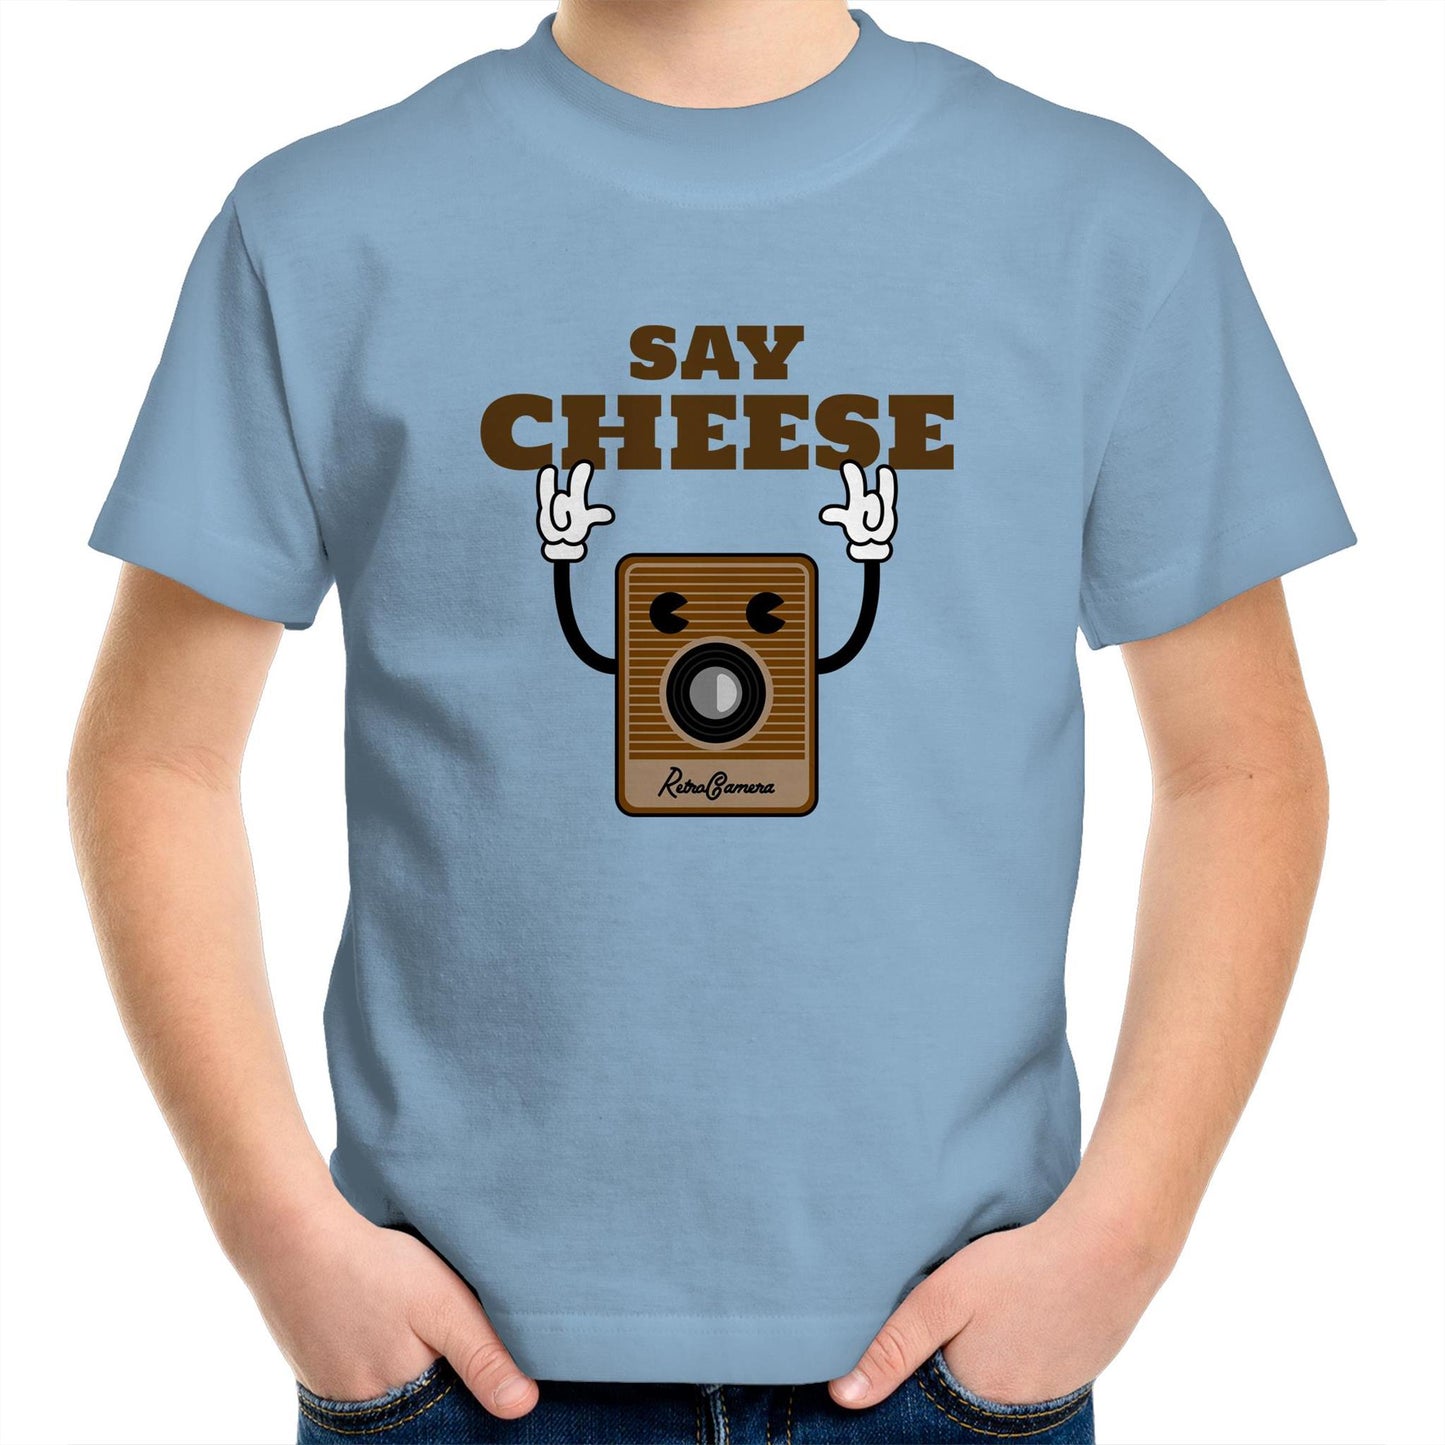 Say Cheese, Retro Camera - Kids Youth Crew T-Shirt Carolina Blue Kids Youth T-shirt Retro Tech